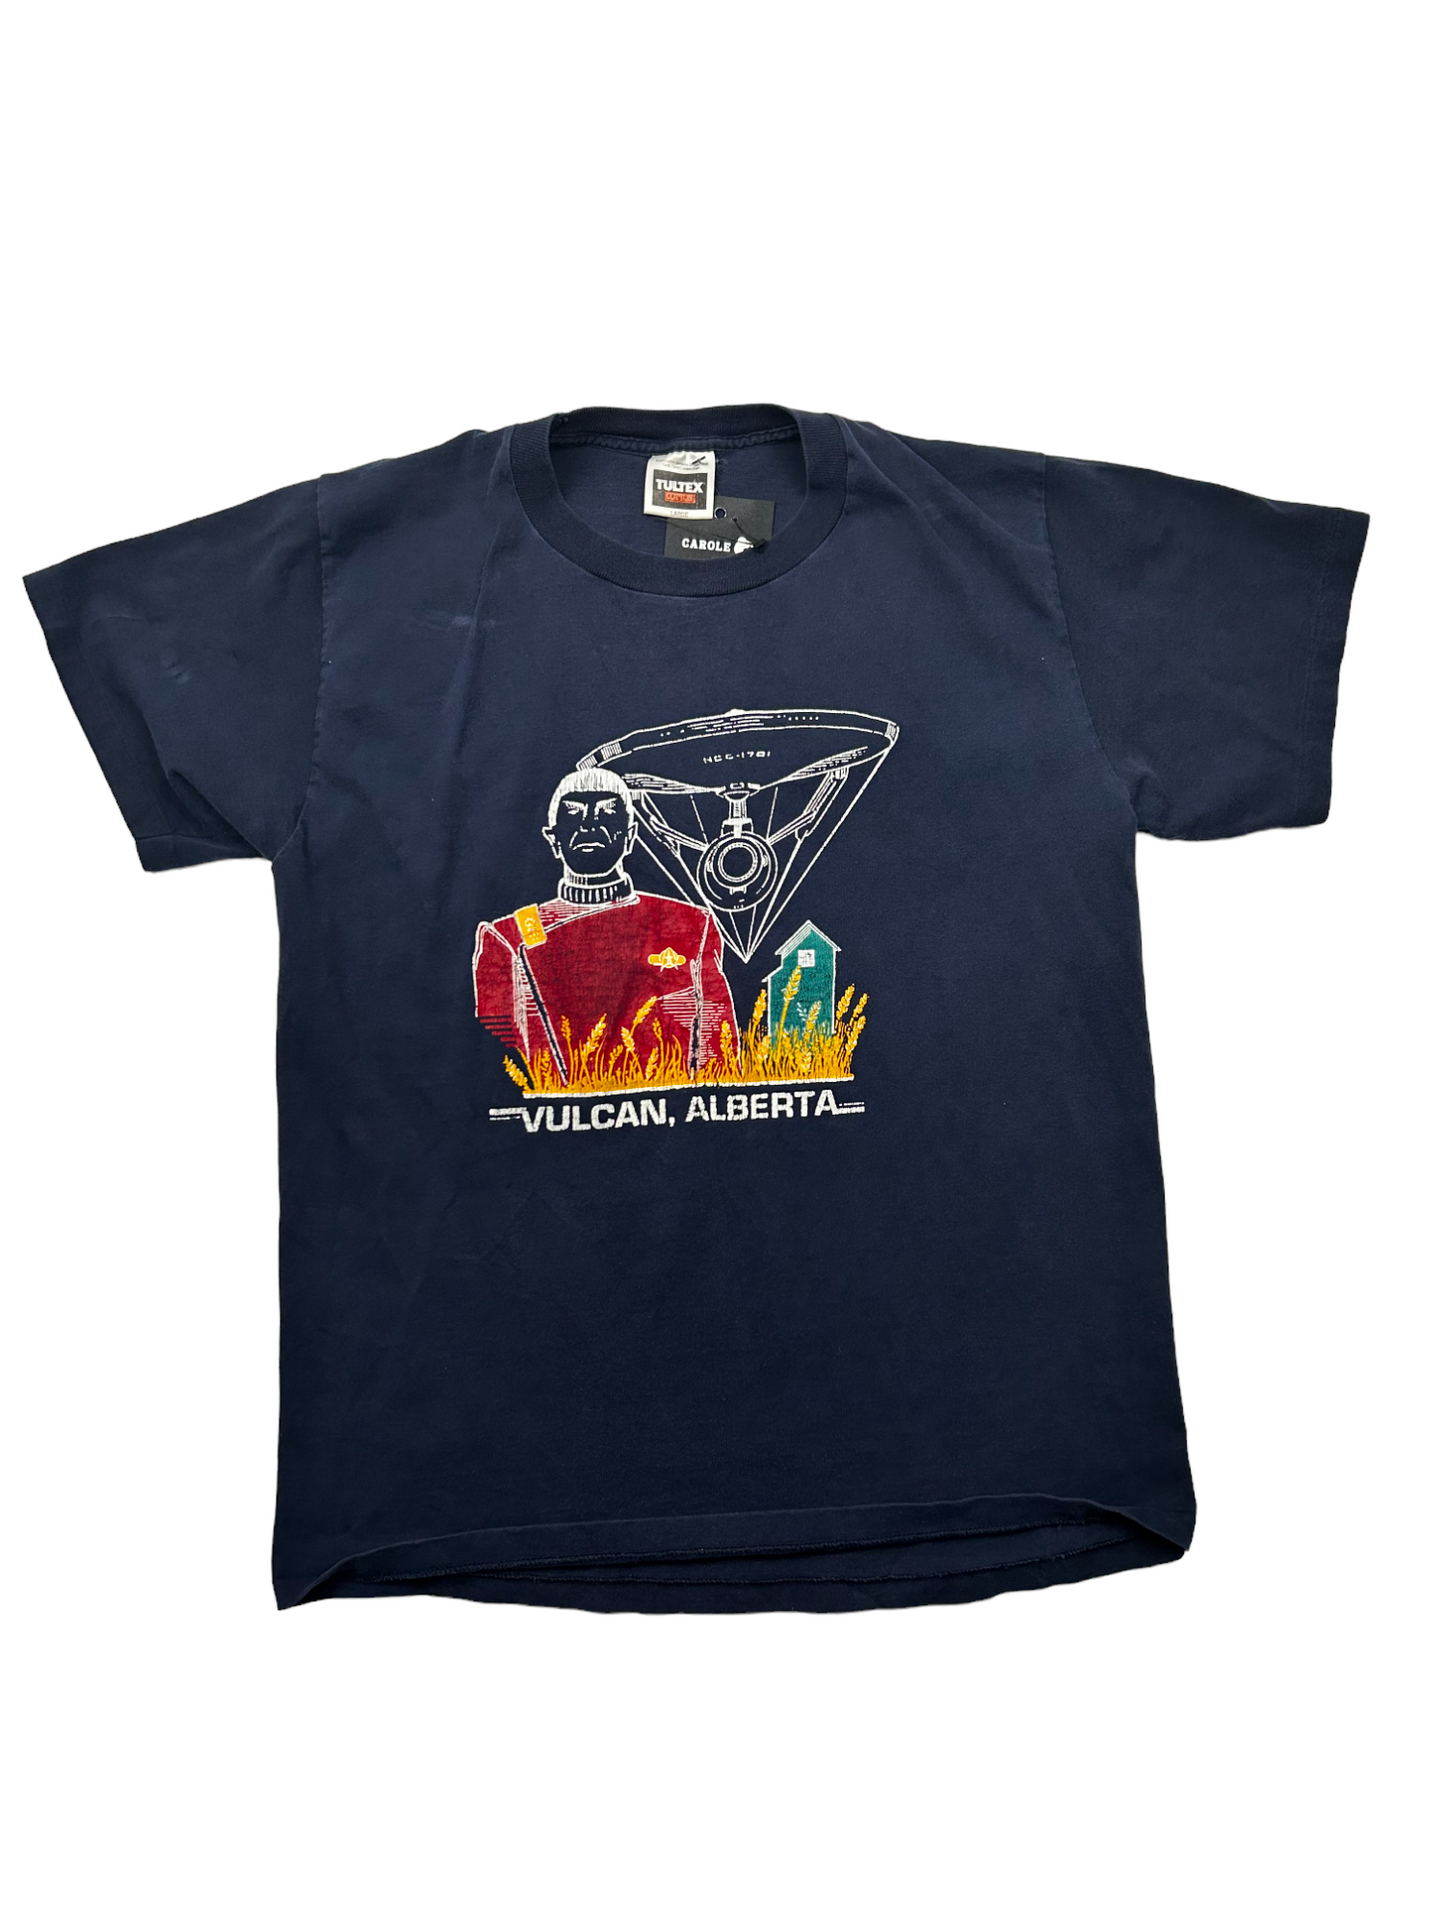 Vulcan Alberta T-Shirt